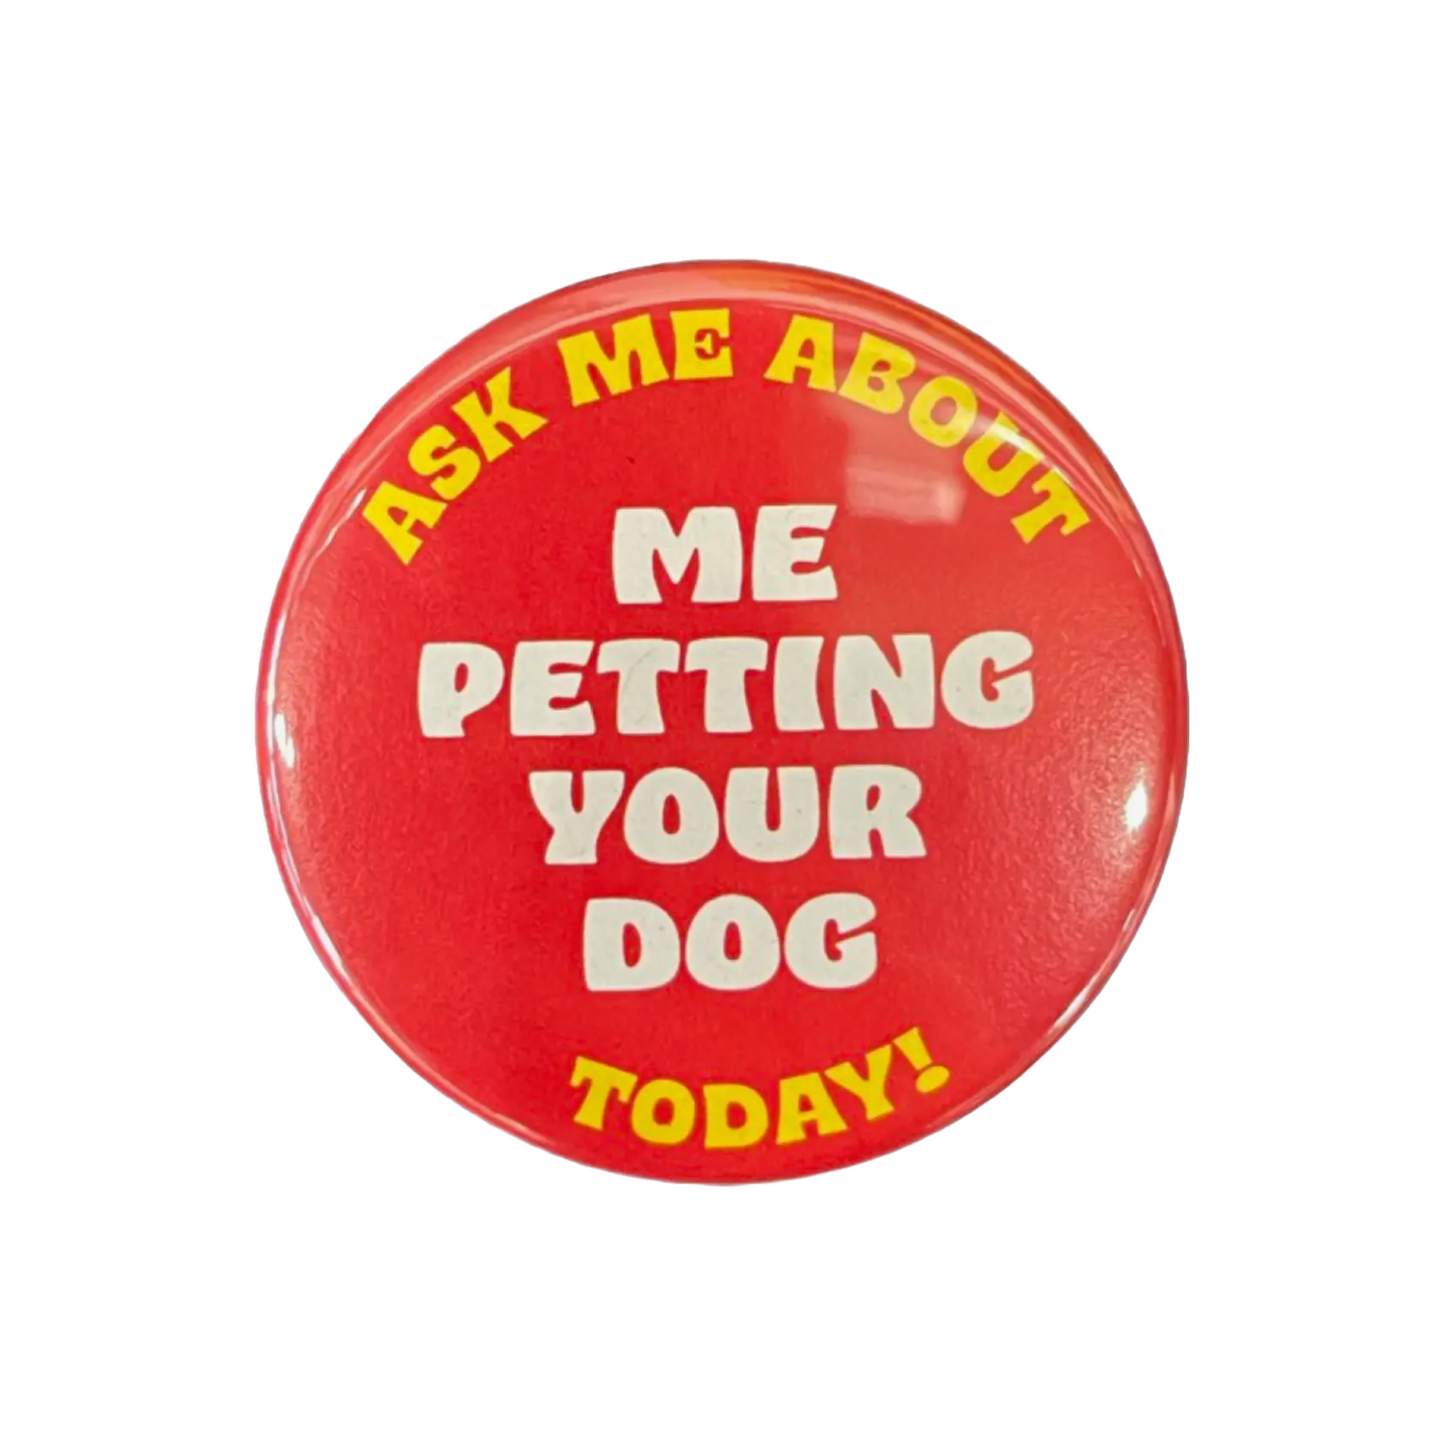 Dog Pets Button